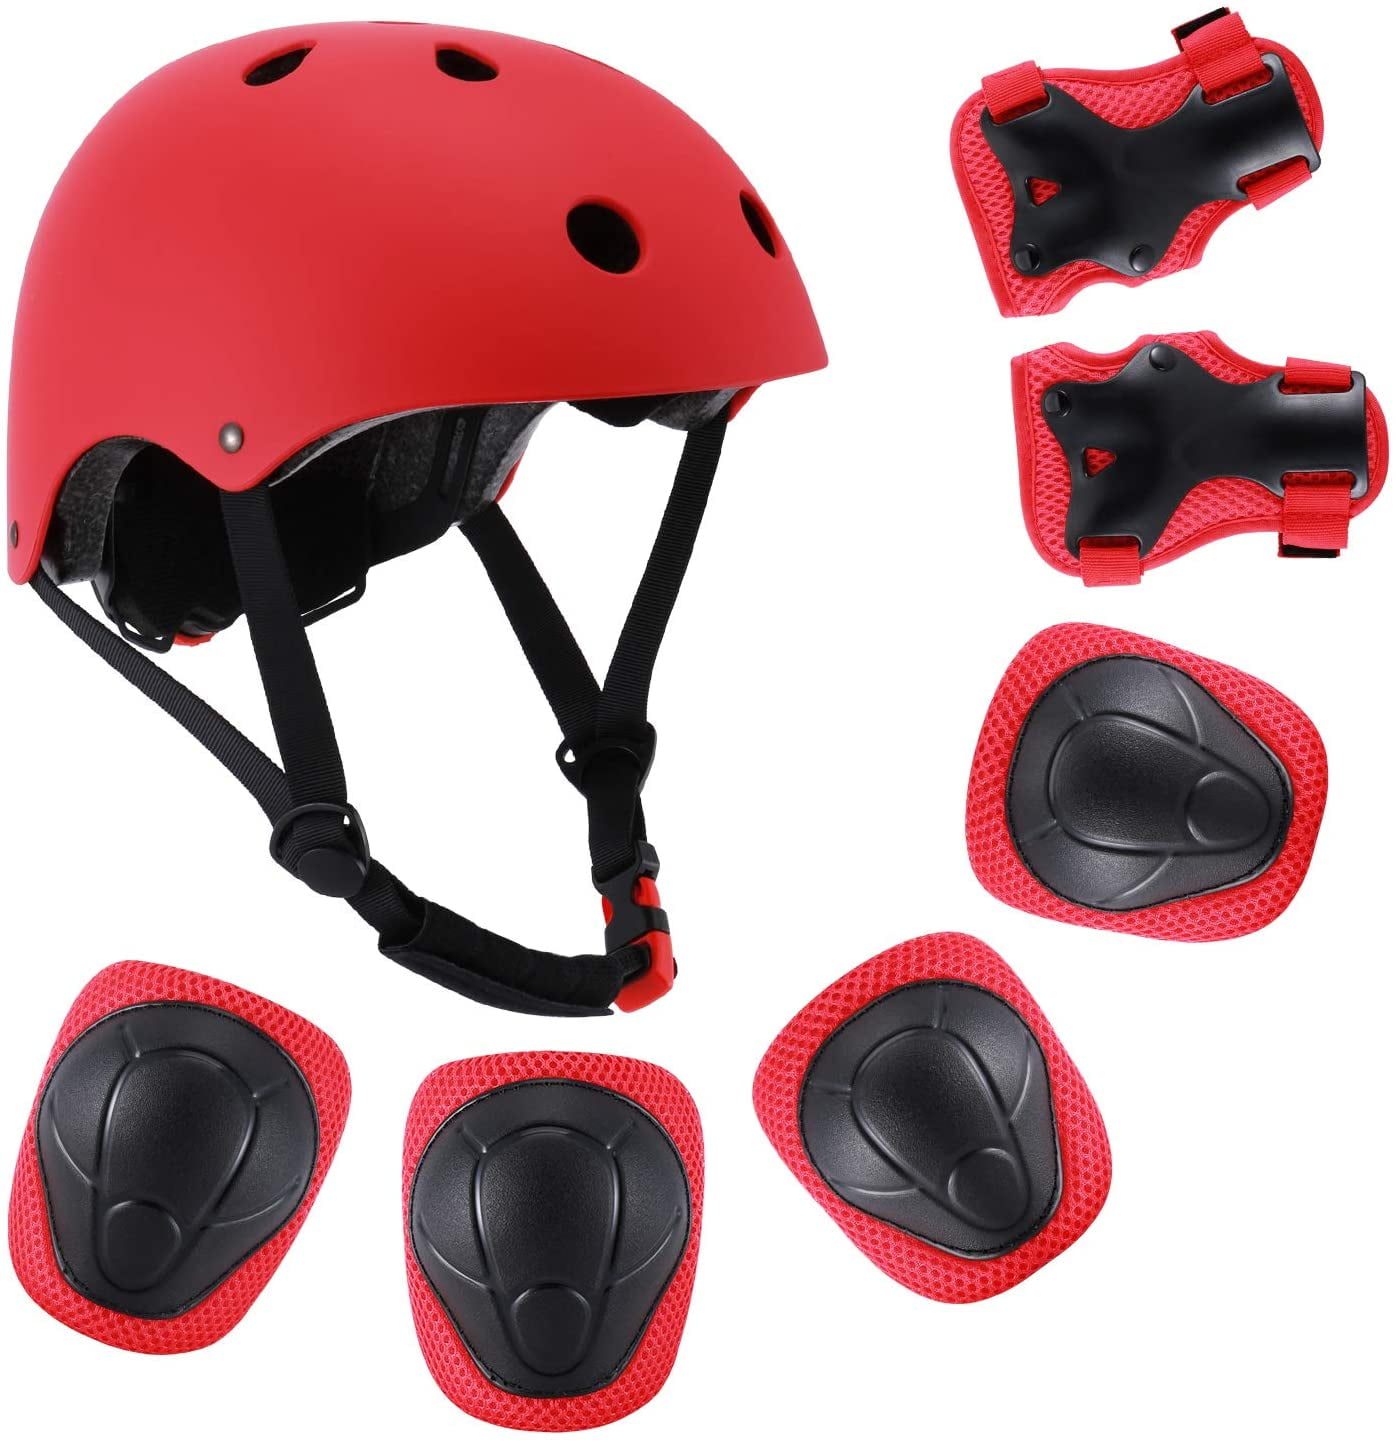 Kids Bike Helmet Toddler Helmet Skateboard Protective Gear Set for Age